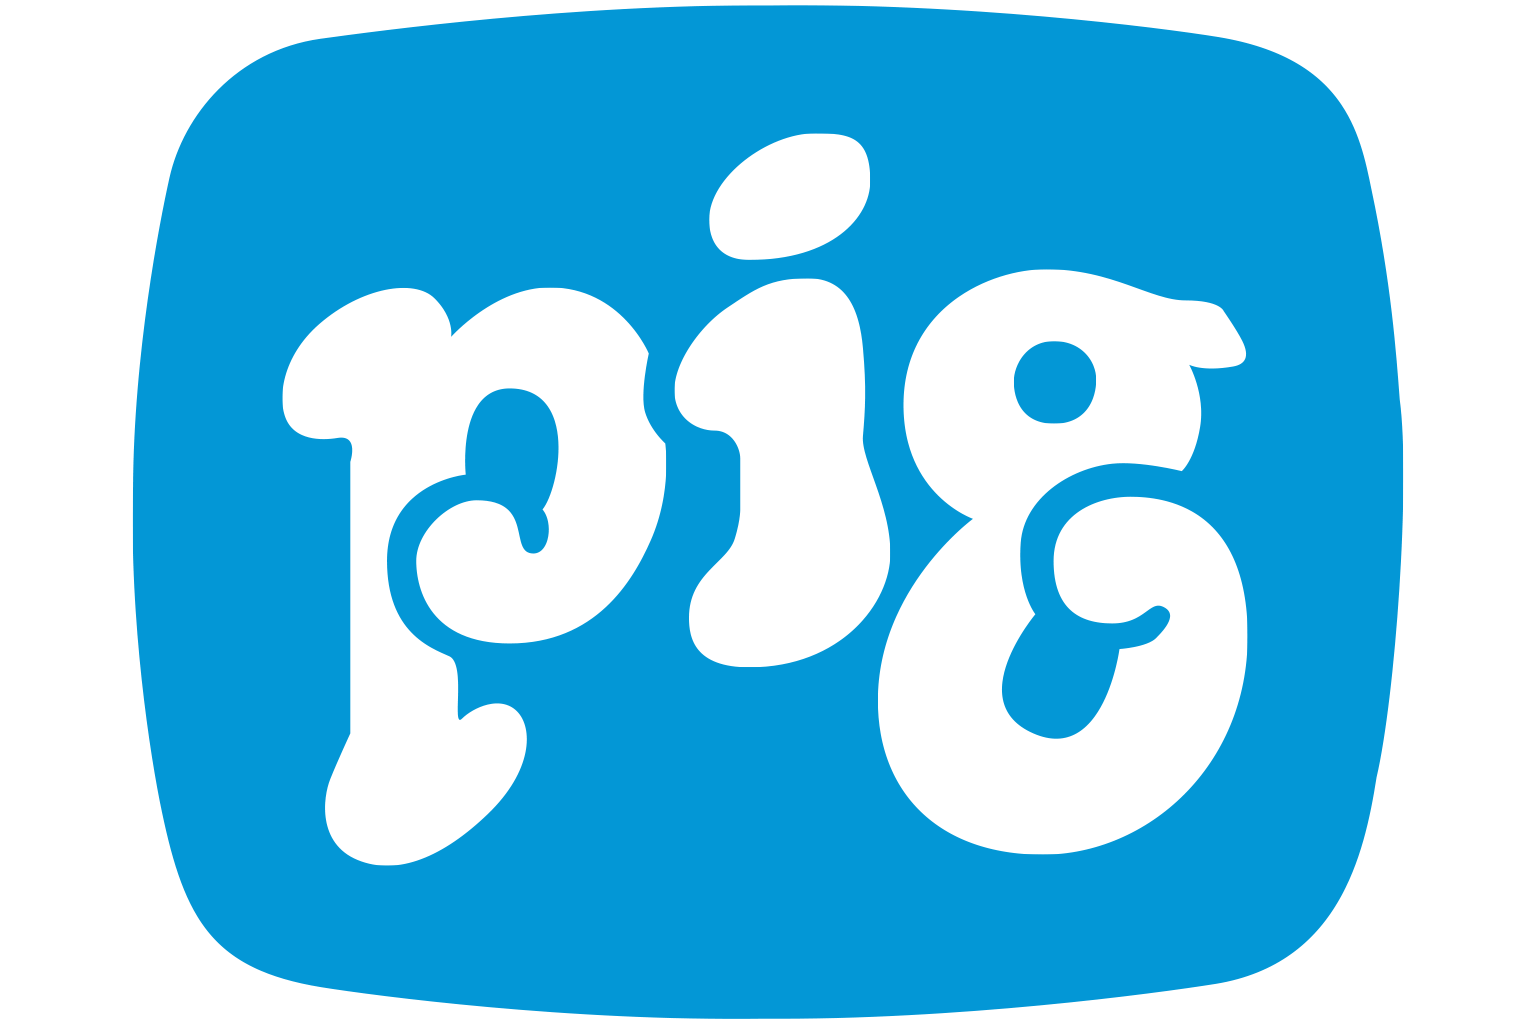 New Pig Corporation